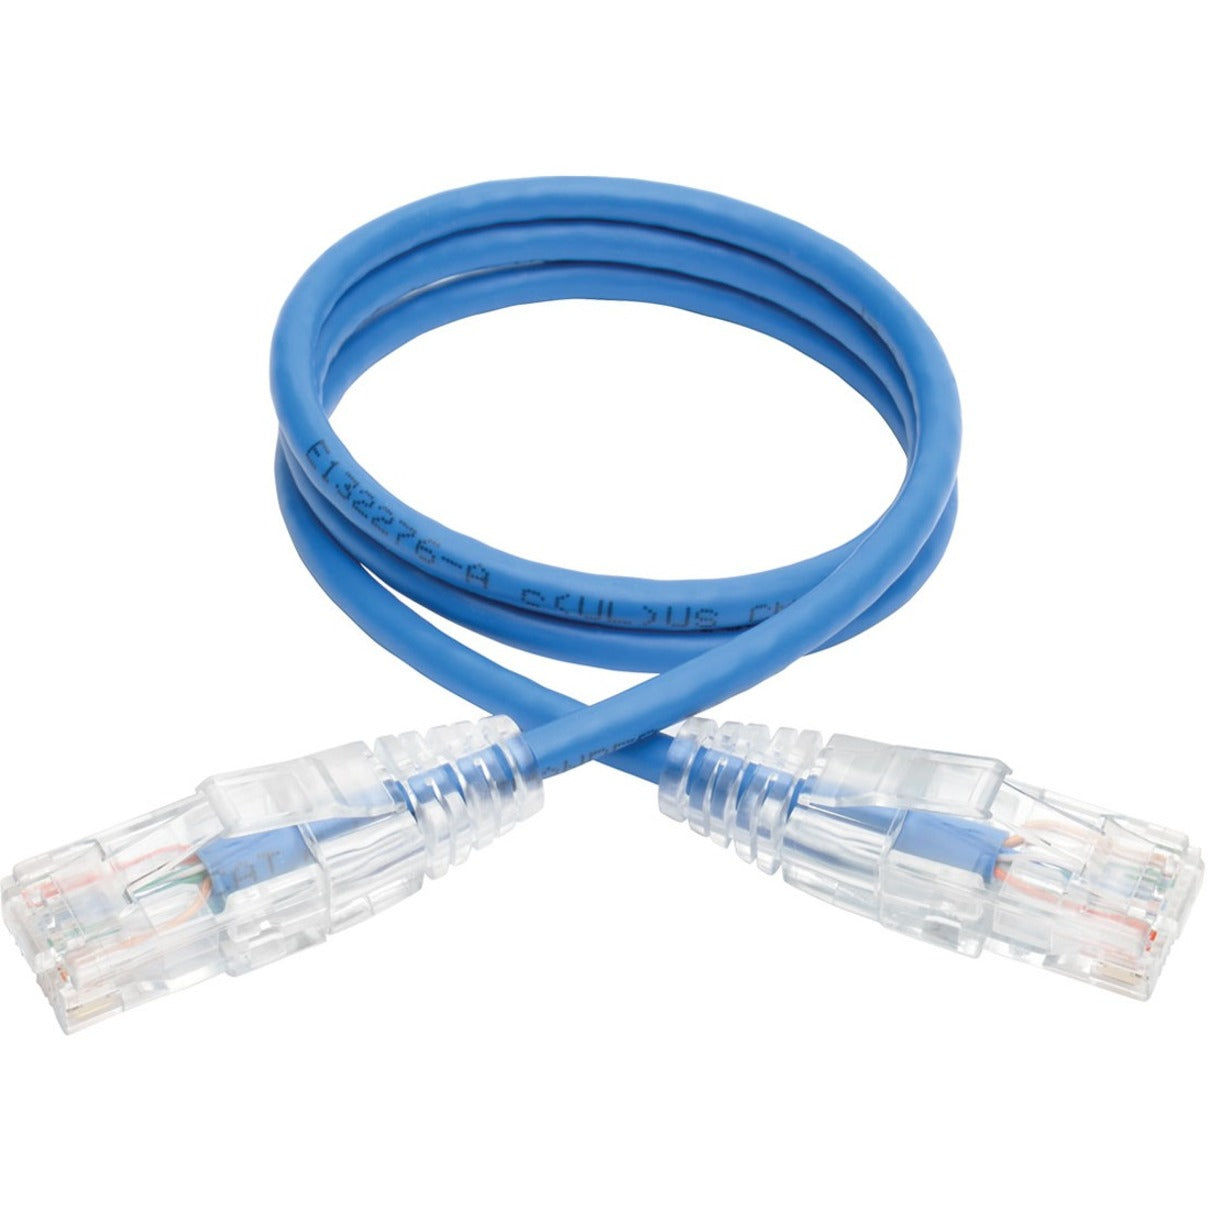 Tripp Lite N201-S02-BL Cat6 Gigabit Snagless Molded Slim UTP Patch Cable (RJ45 M/M) Blue 2ft - Tripp Lite N201-S02-BL Cat6 Gigabit Senza Inceppamenti Sagomato Sottile Cavo Patch UTP (RJ45 M/M) Blu 2ft